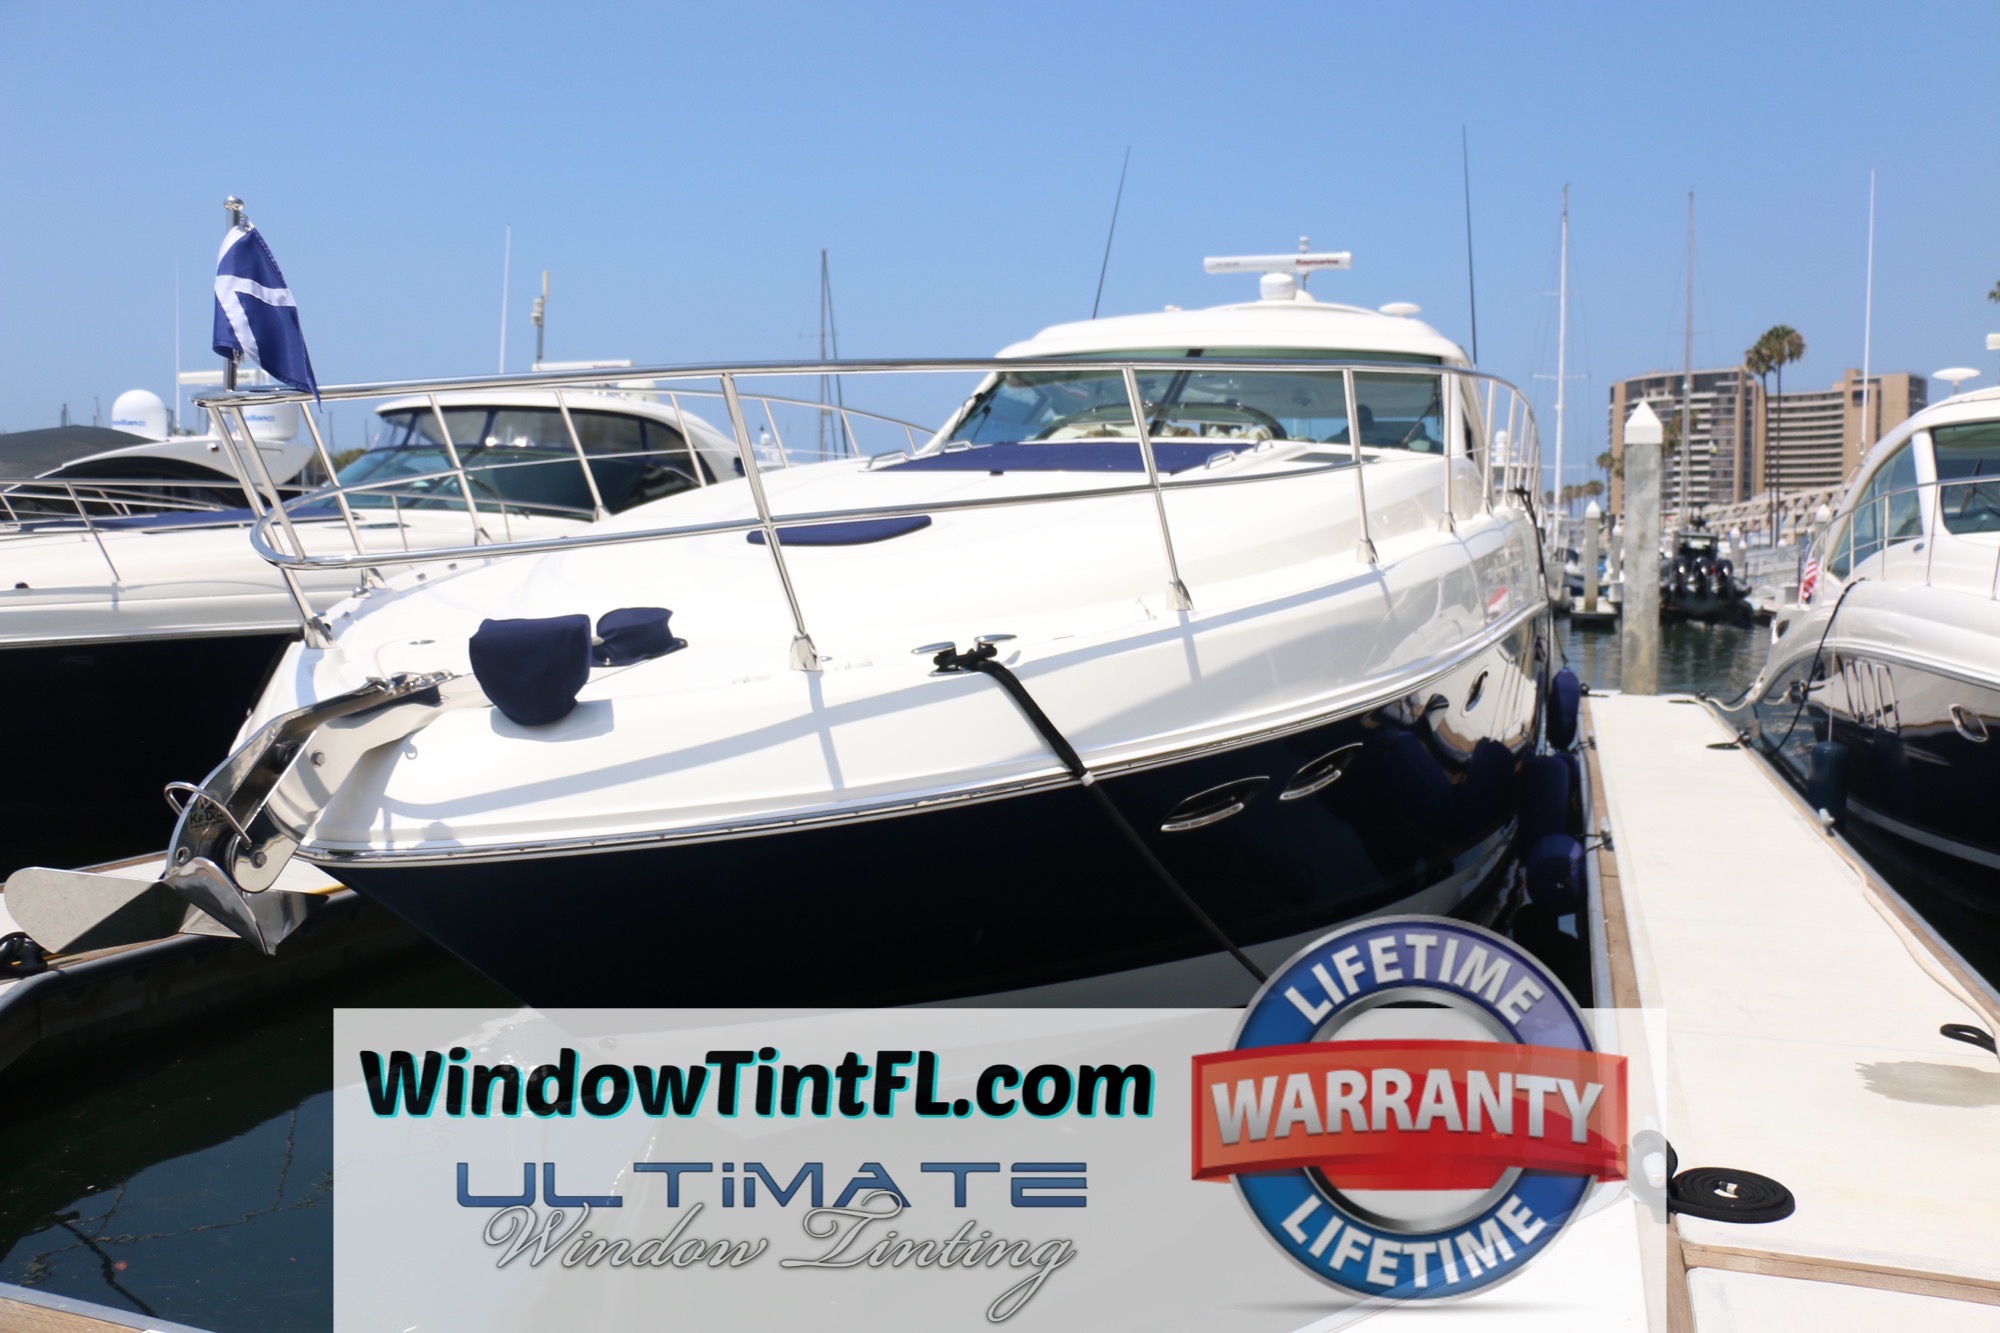 Marine Solar Window Film - Boat Window Tinting in Sarasota Florida - The Yacht Window Tinting Specialists! Ultimate Window Tinting